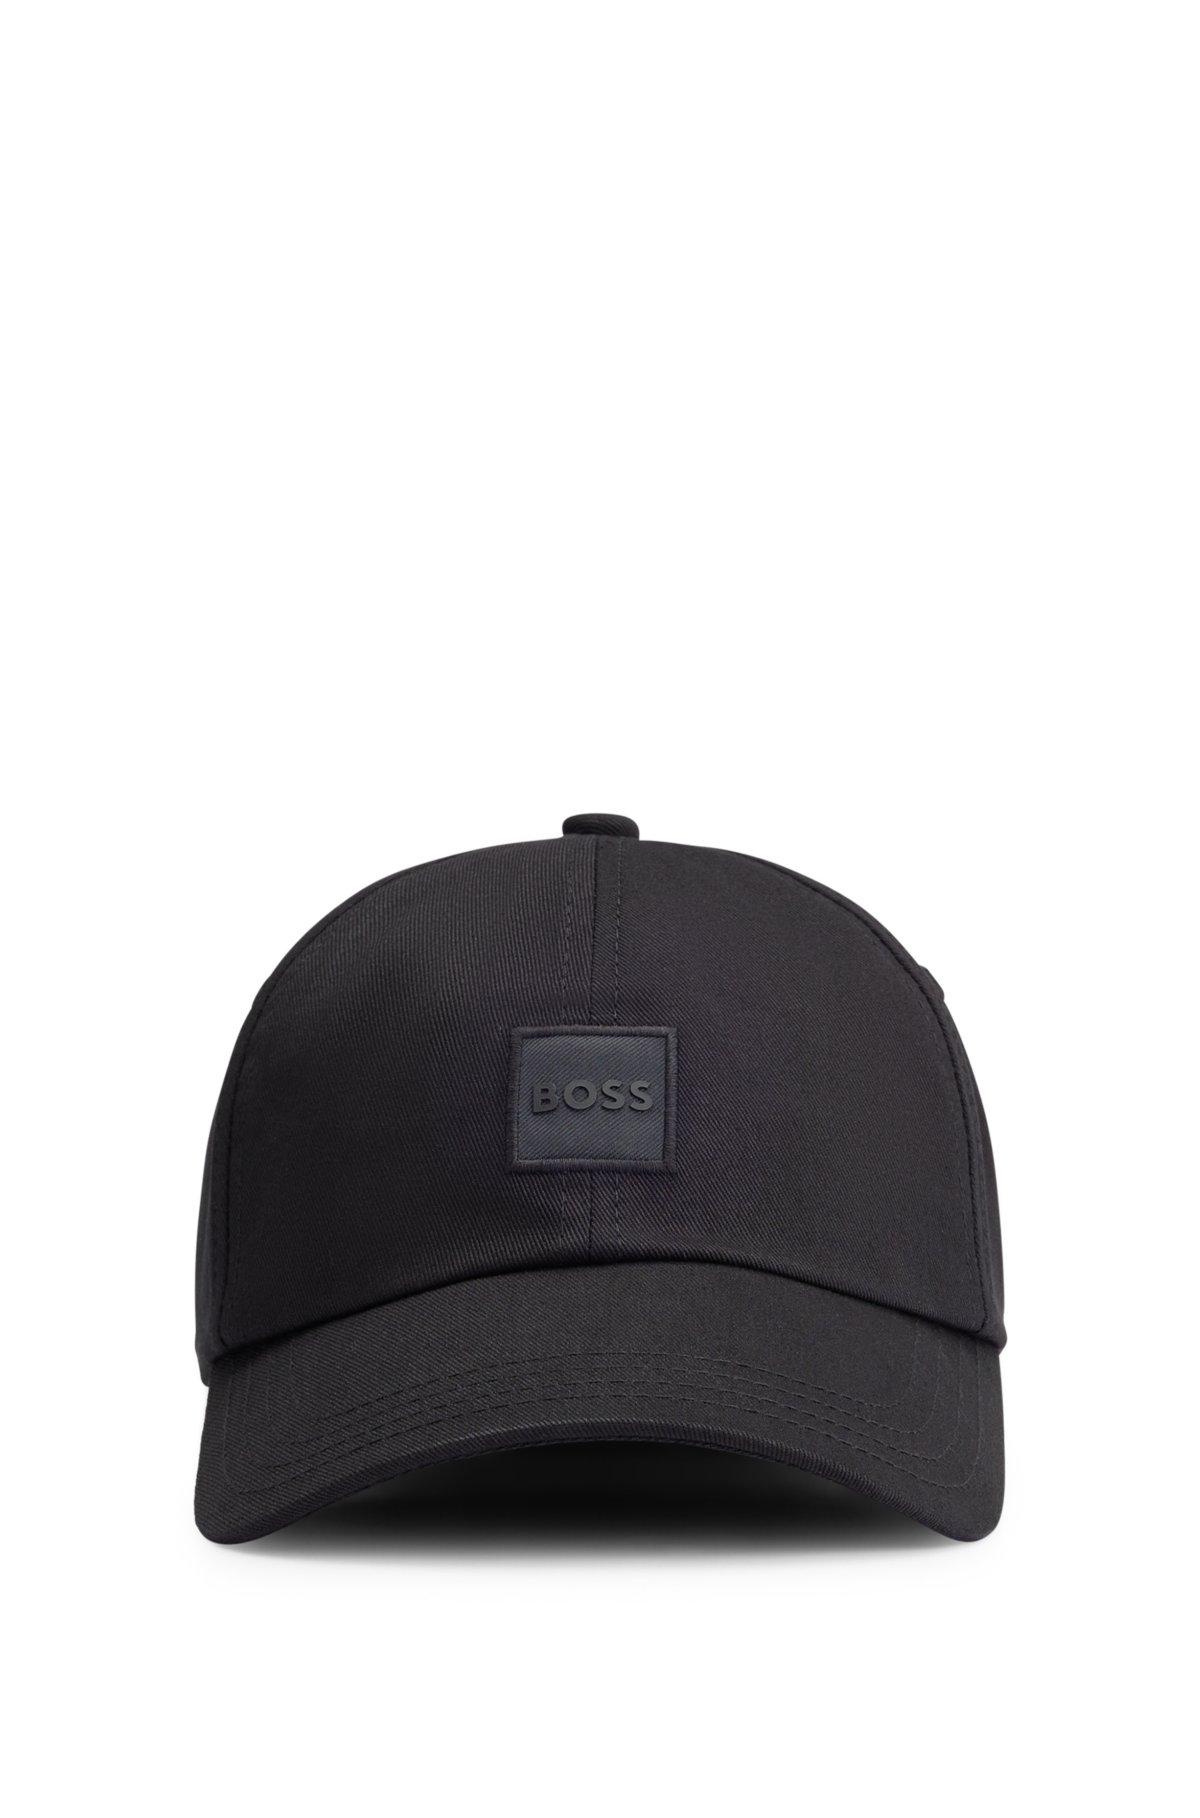 Cotton-twill cap with tonal logo patch, Black